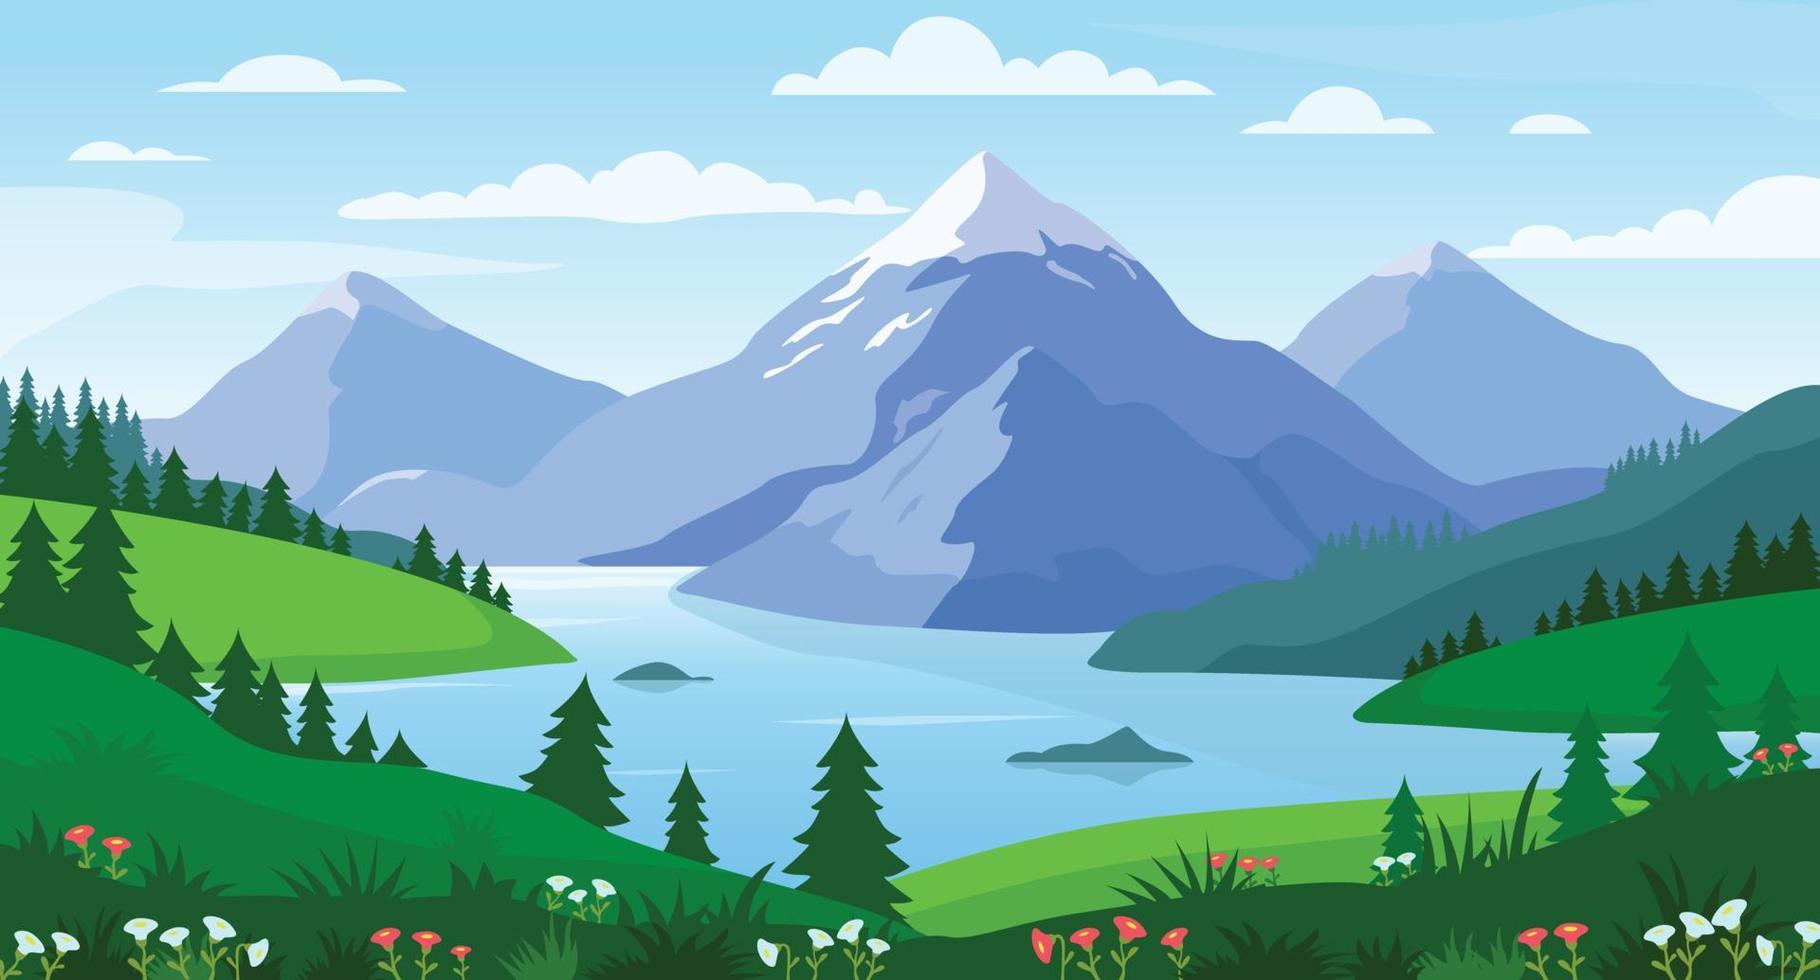 montaña lago paisaje vector ilustración. panorama de primavera verano hermosa naturaleza, prado con flores, bosque, escénico azul lago y montañas en horizonte antecedentes.